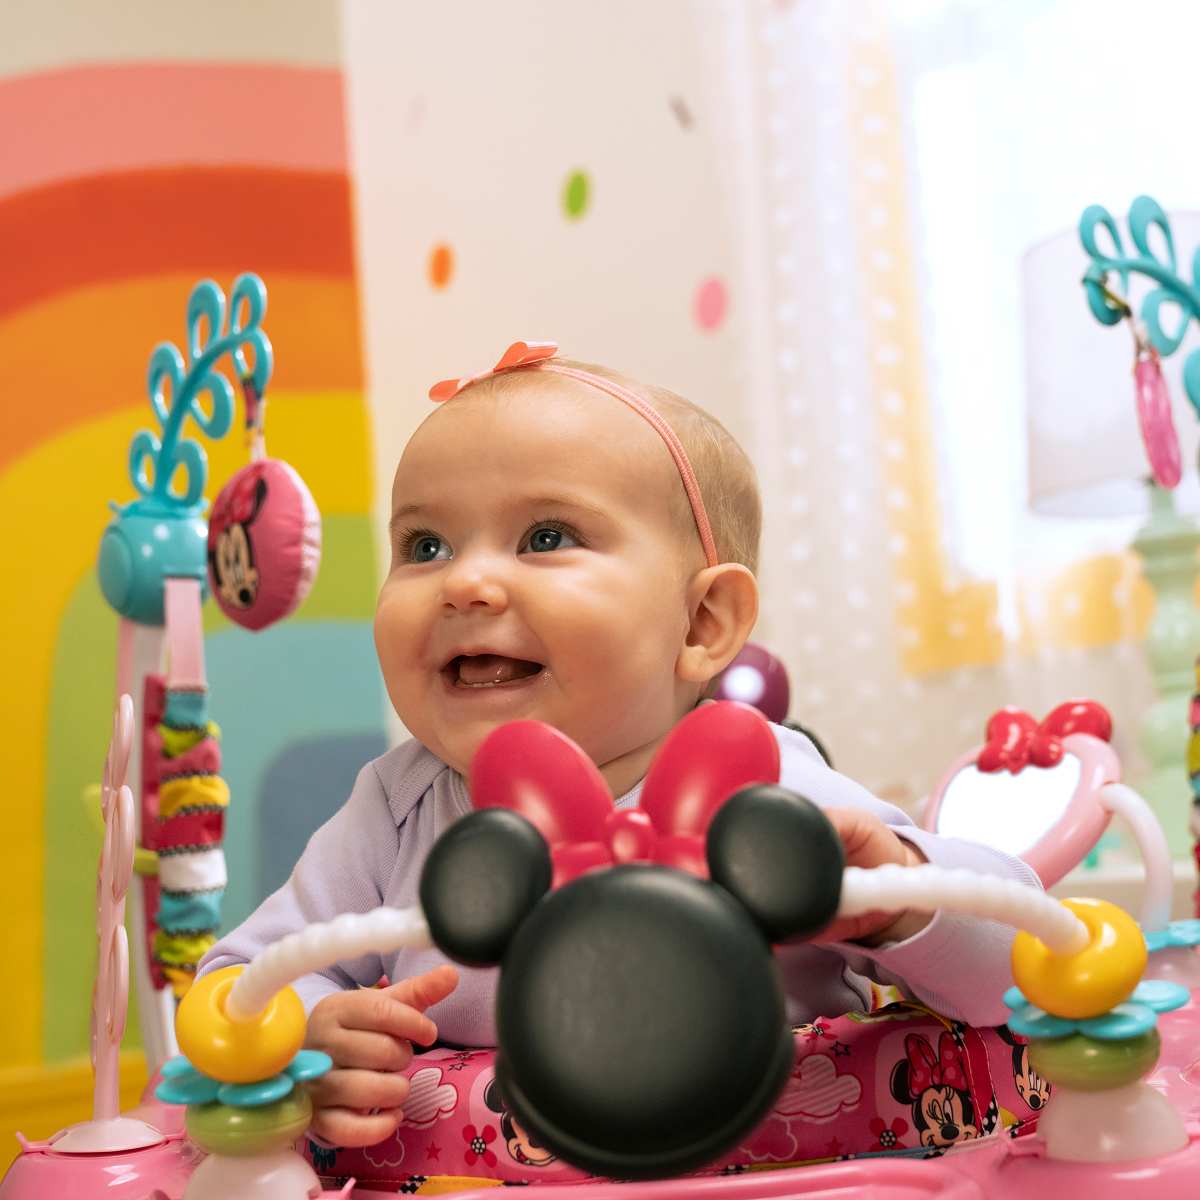 Disney Baby Minnie Mouse PeekABoo Activity Jumper™